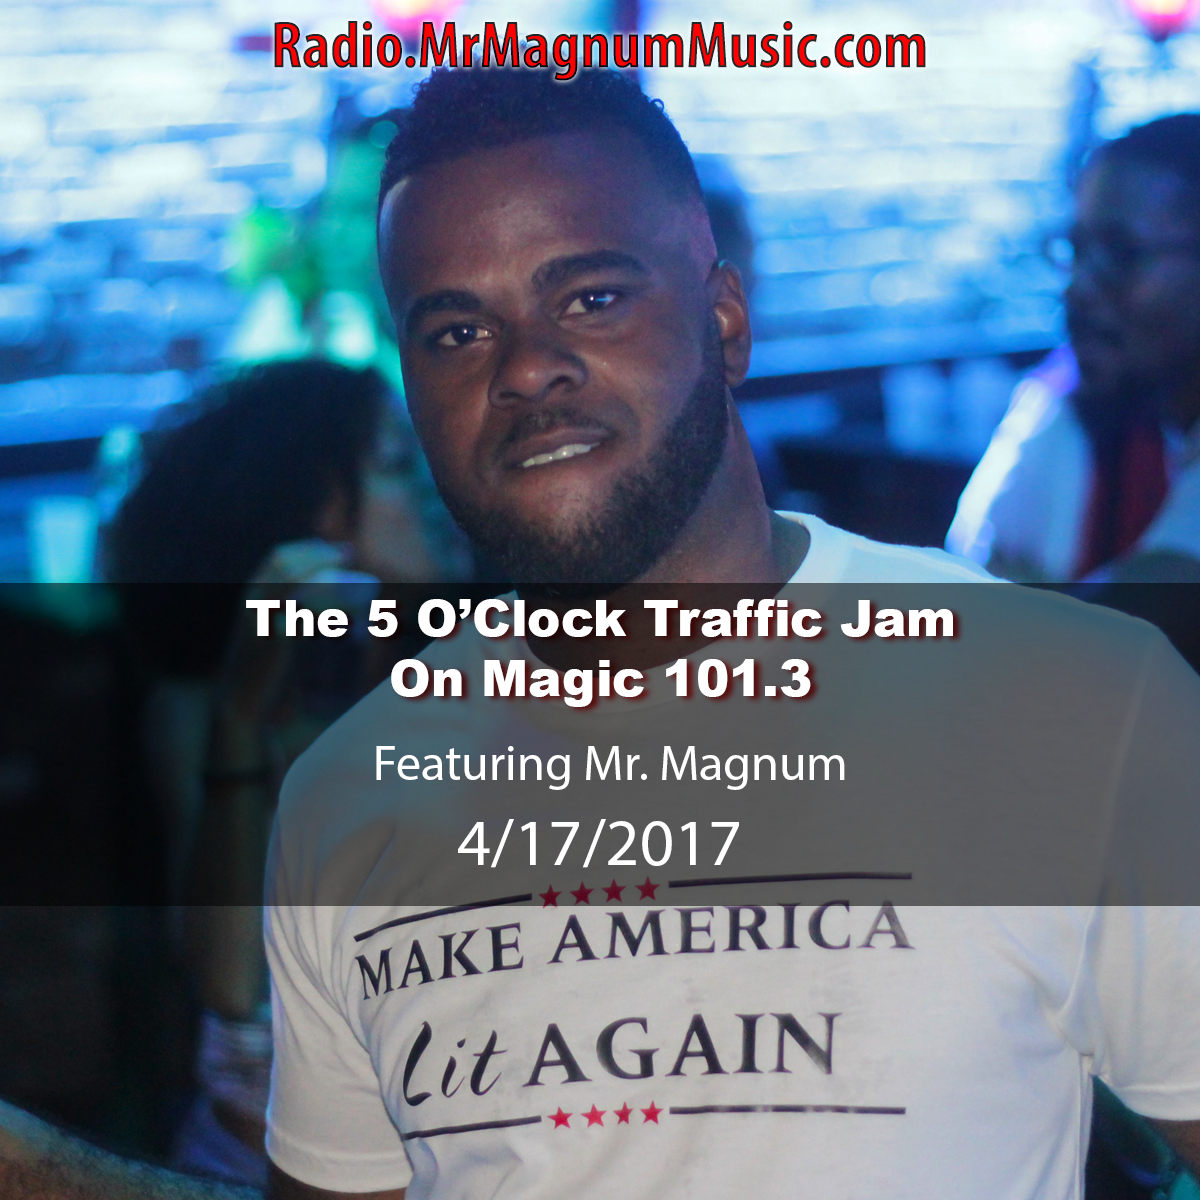 The 5 O'Clock Traffic Jam 20170417 featuring Gainesville's #1 DJ, Mr. Magnum on Magic 101.3